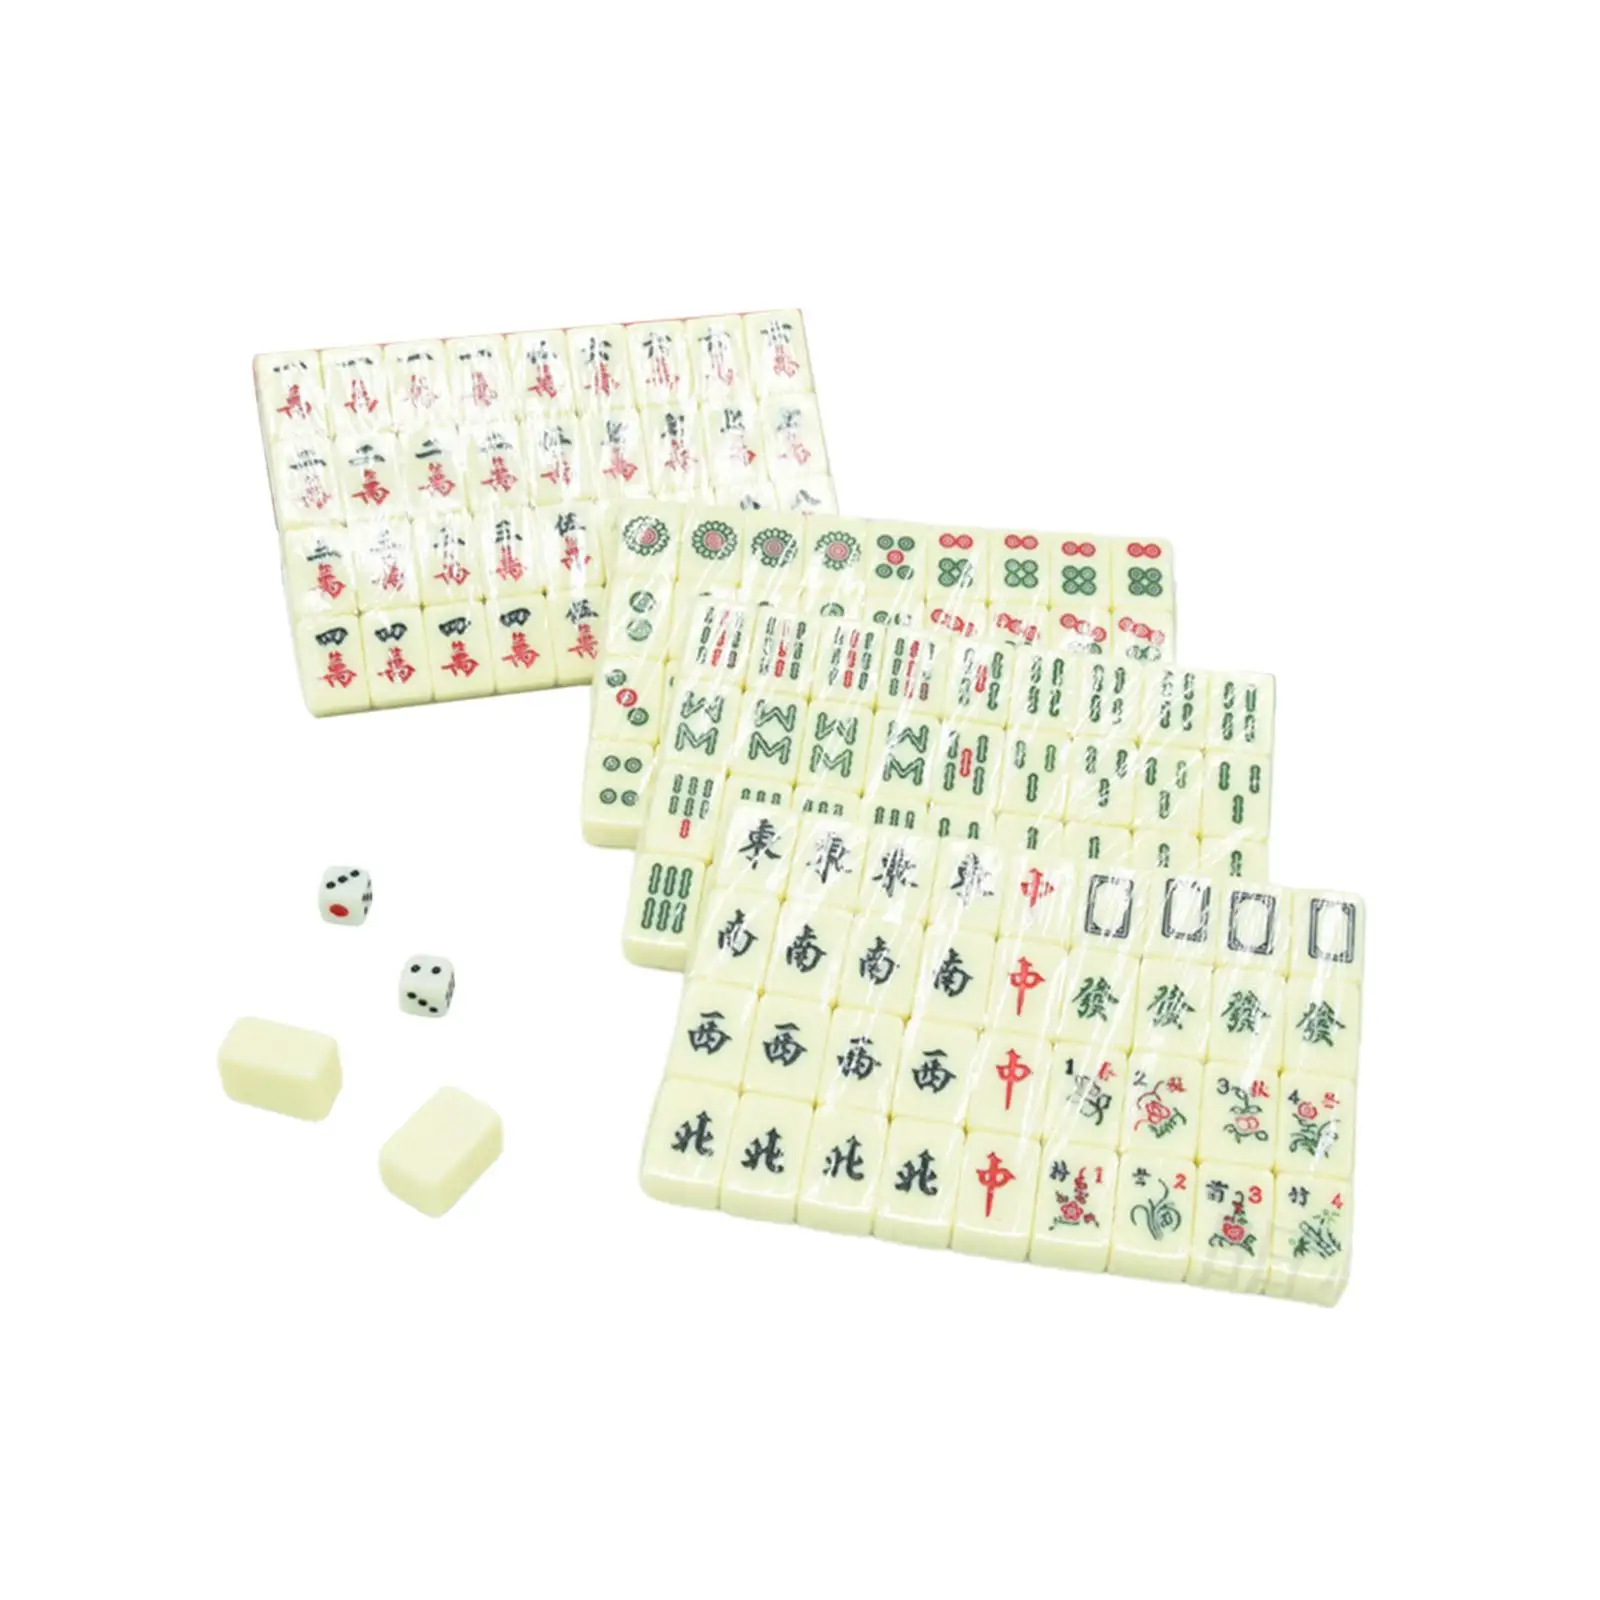 Portable Mini Mahjong Lightweight Board Game Small Tiles Chinese Mahjong Game Set Travel Mahjong Set for Entertainment Camping